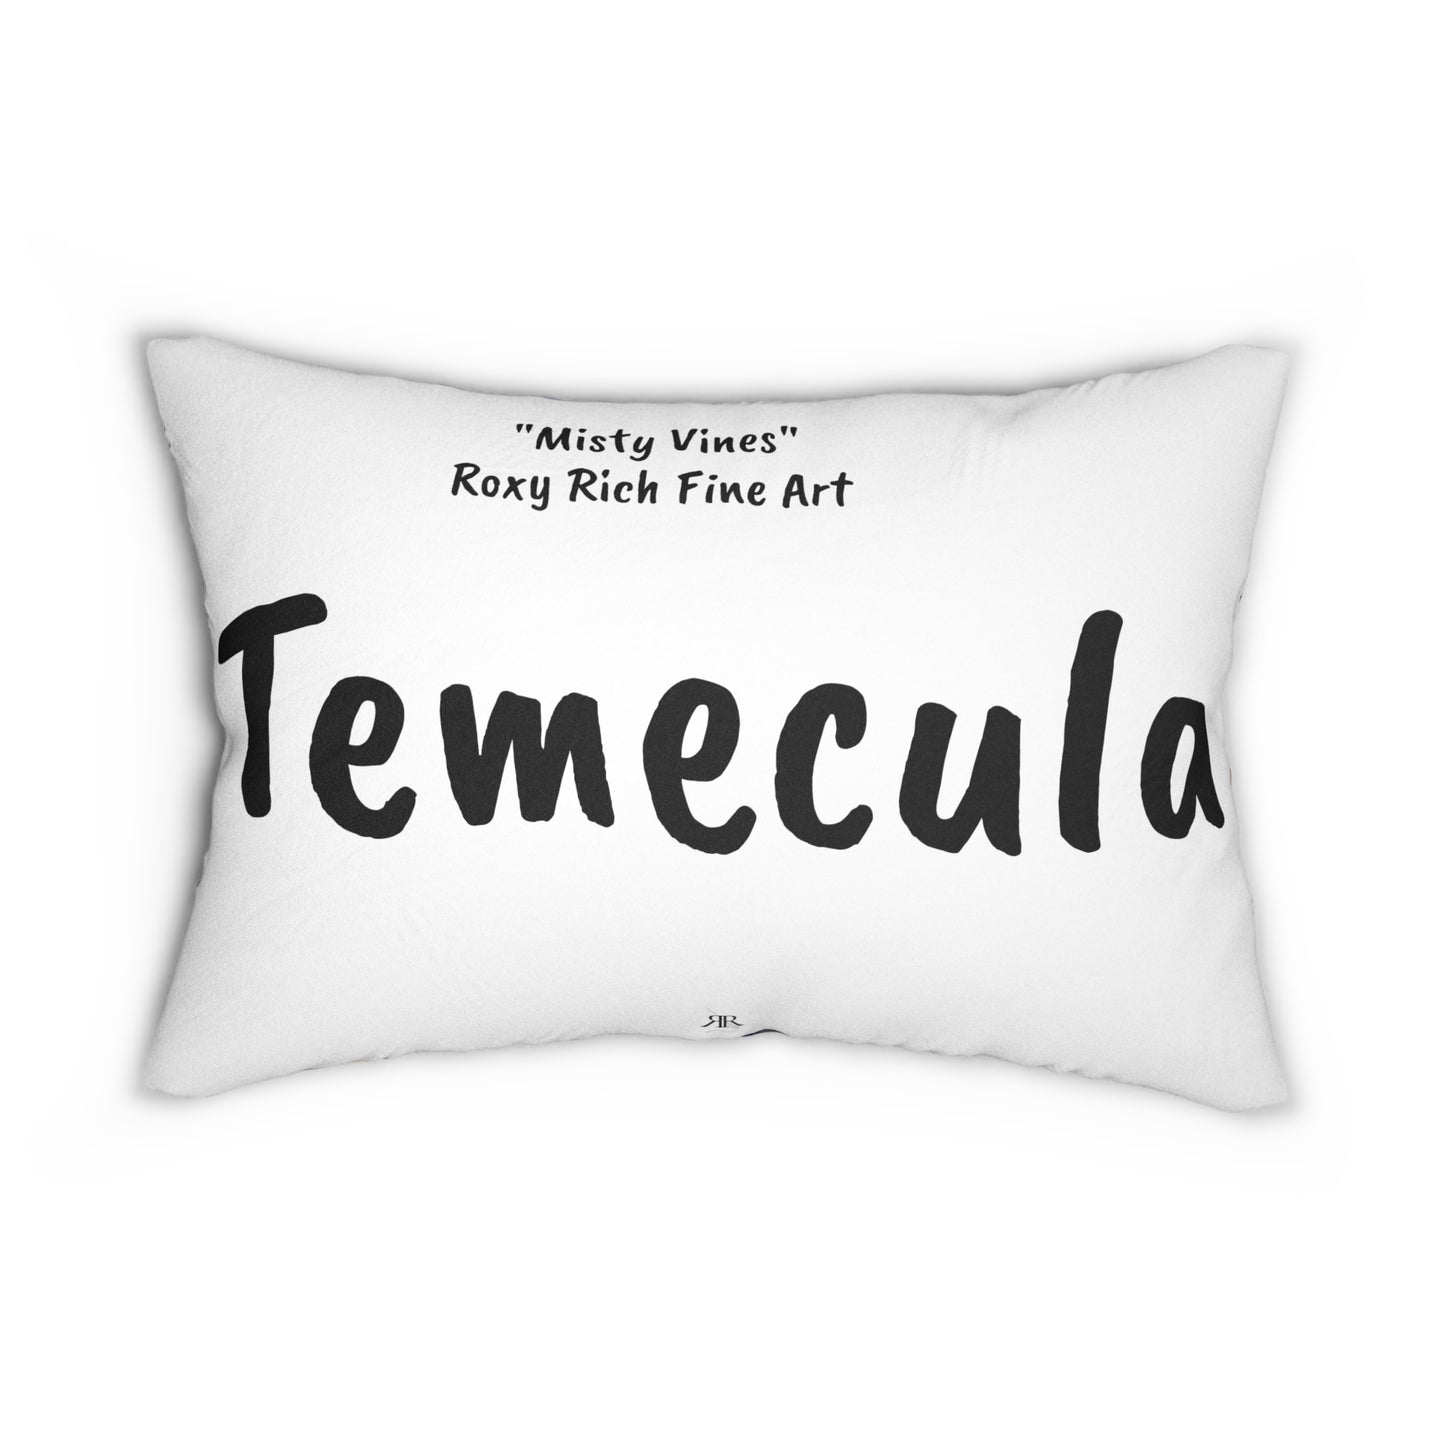 Oreiller lombaire Temecula avec « Misty Vines », Roxy Rich Fine Art et « Temecula »